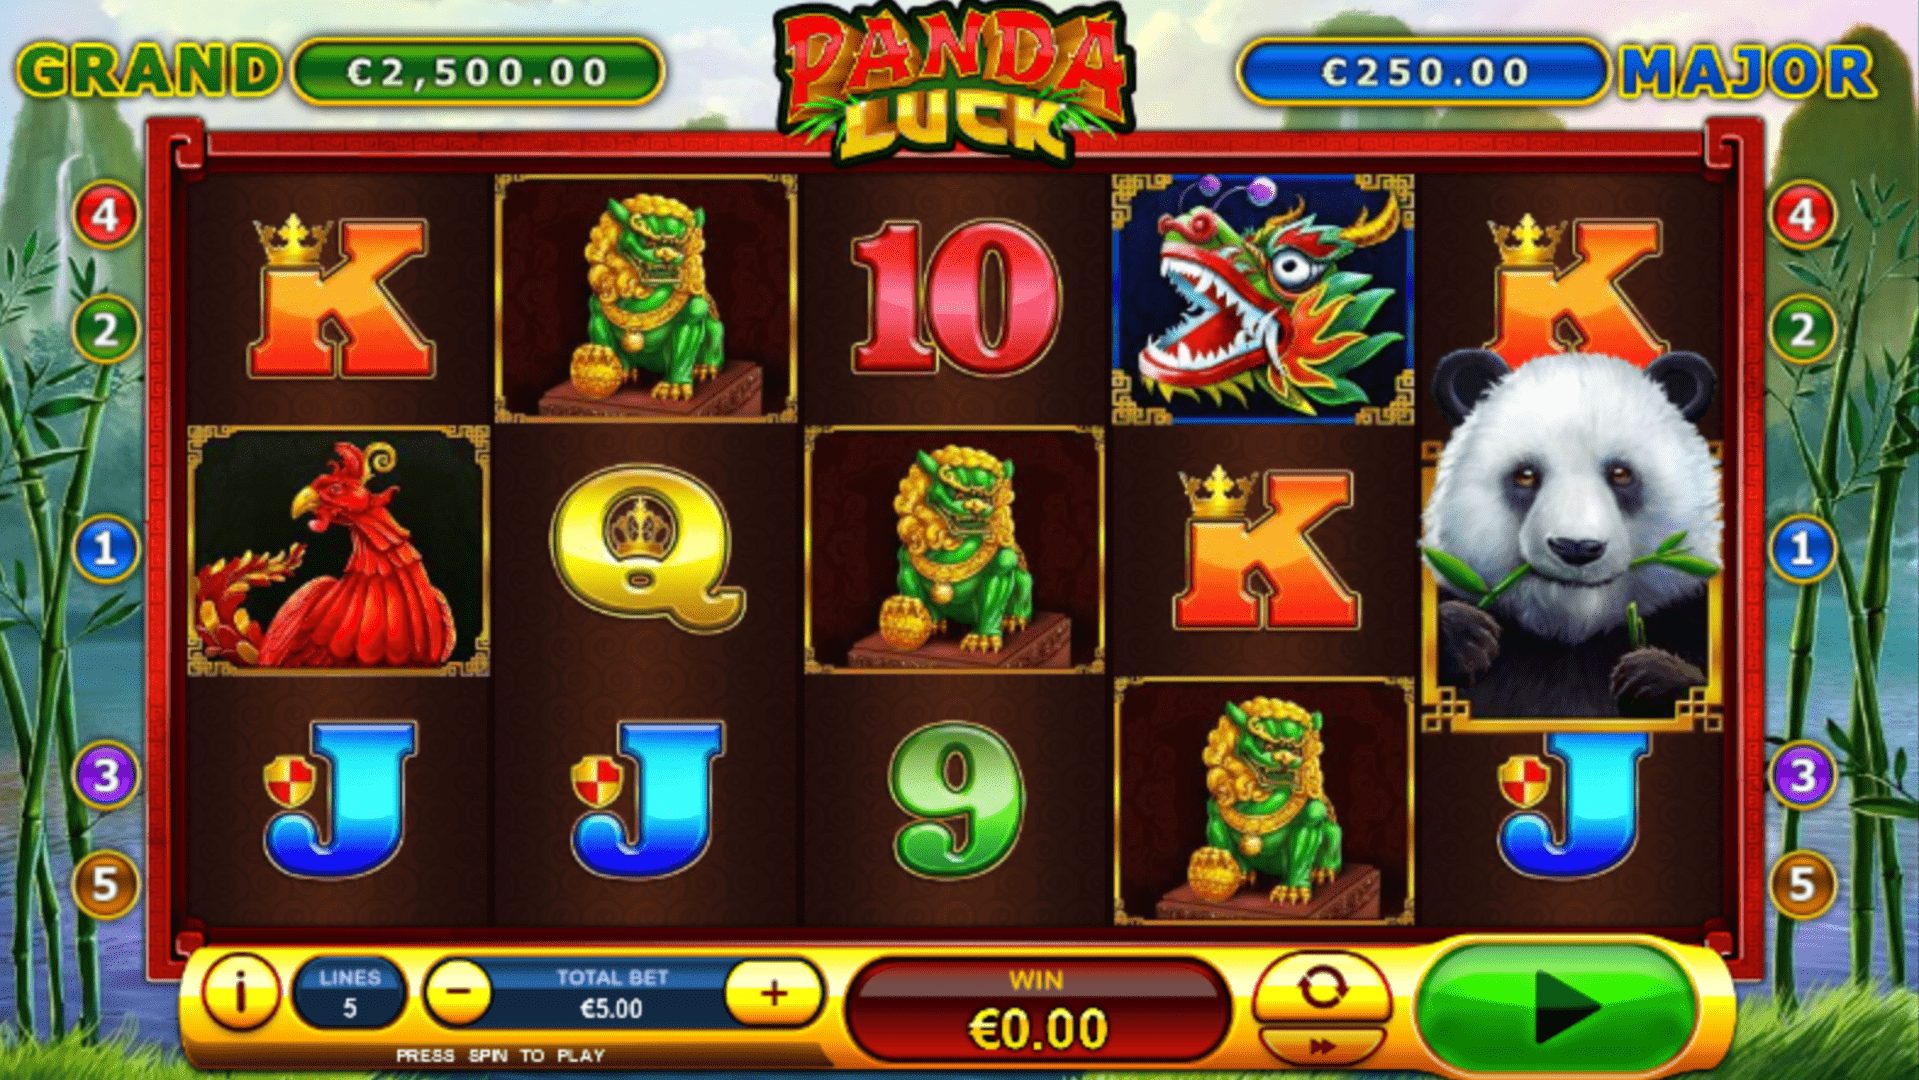 Panda Luck Slot Game from BGaming